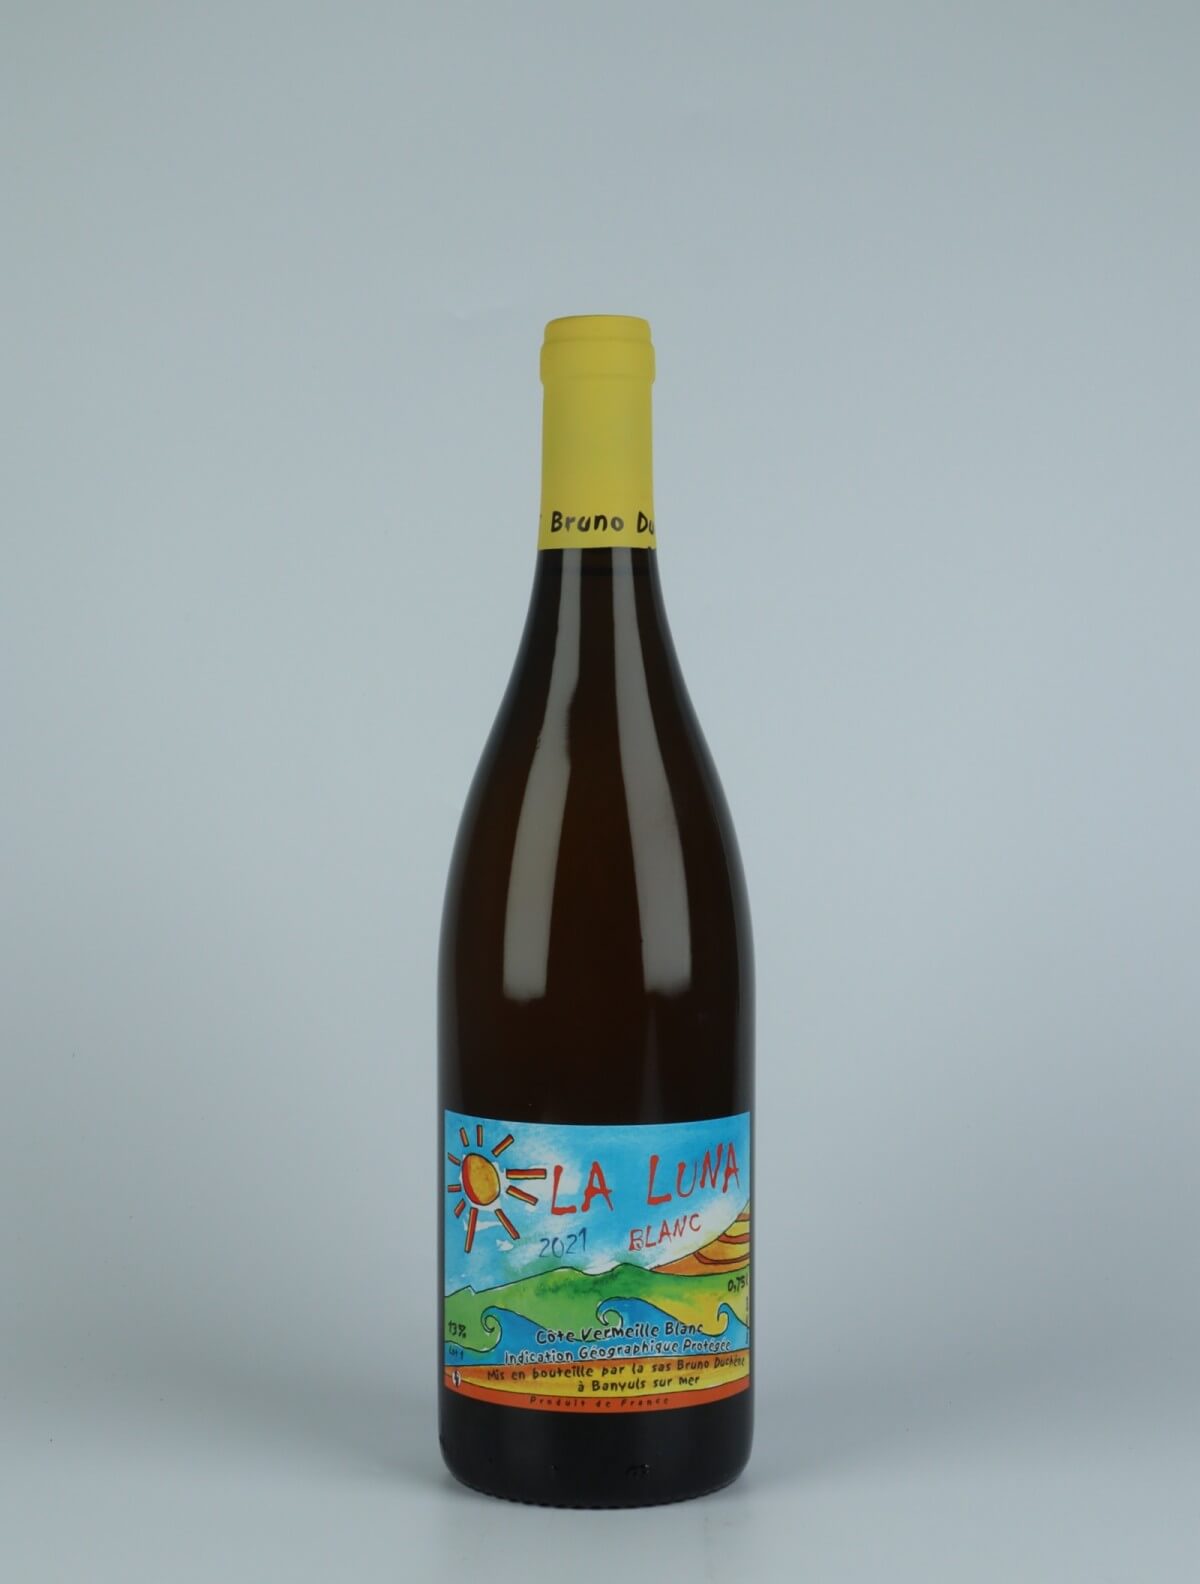 A bottle 2021 La Luna Blanc White wine from Bruno Duchêne, Rousillon in France